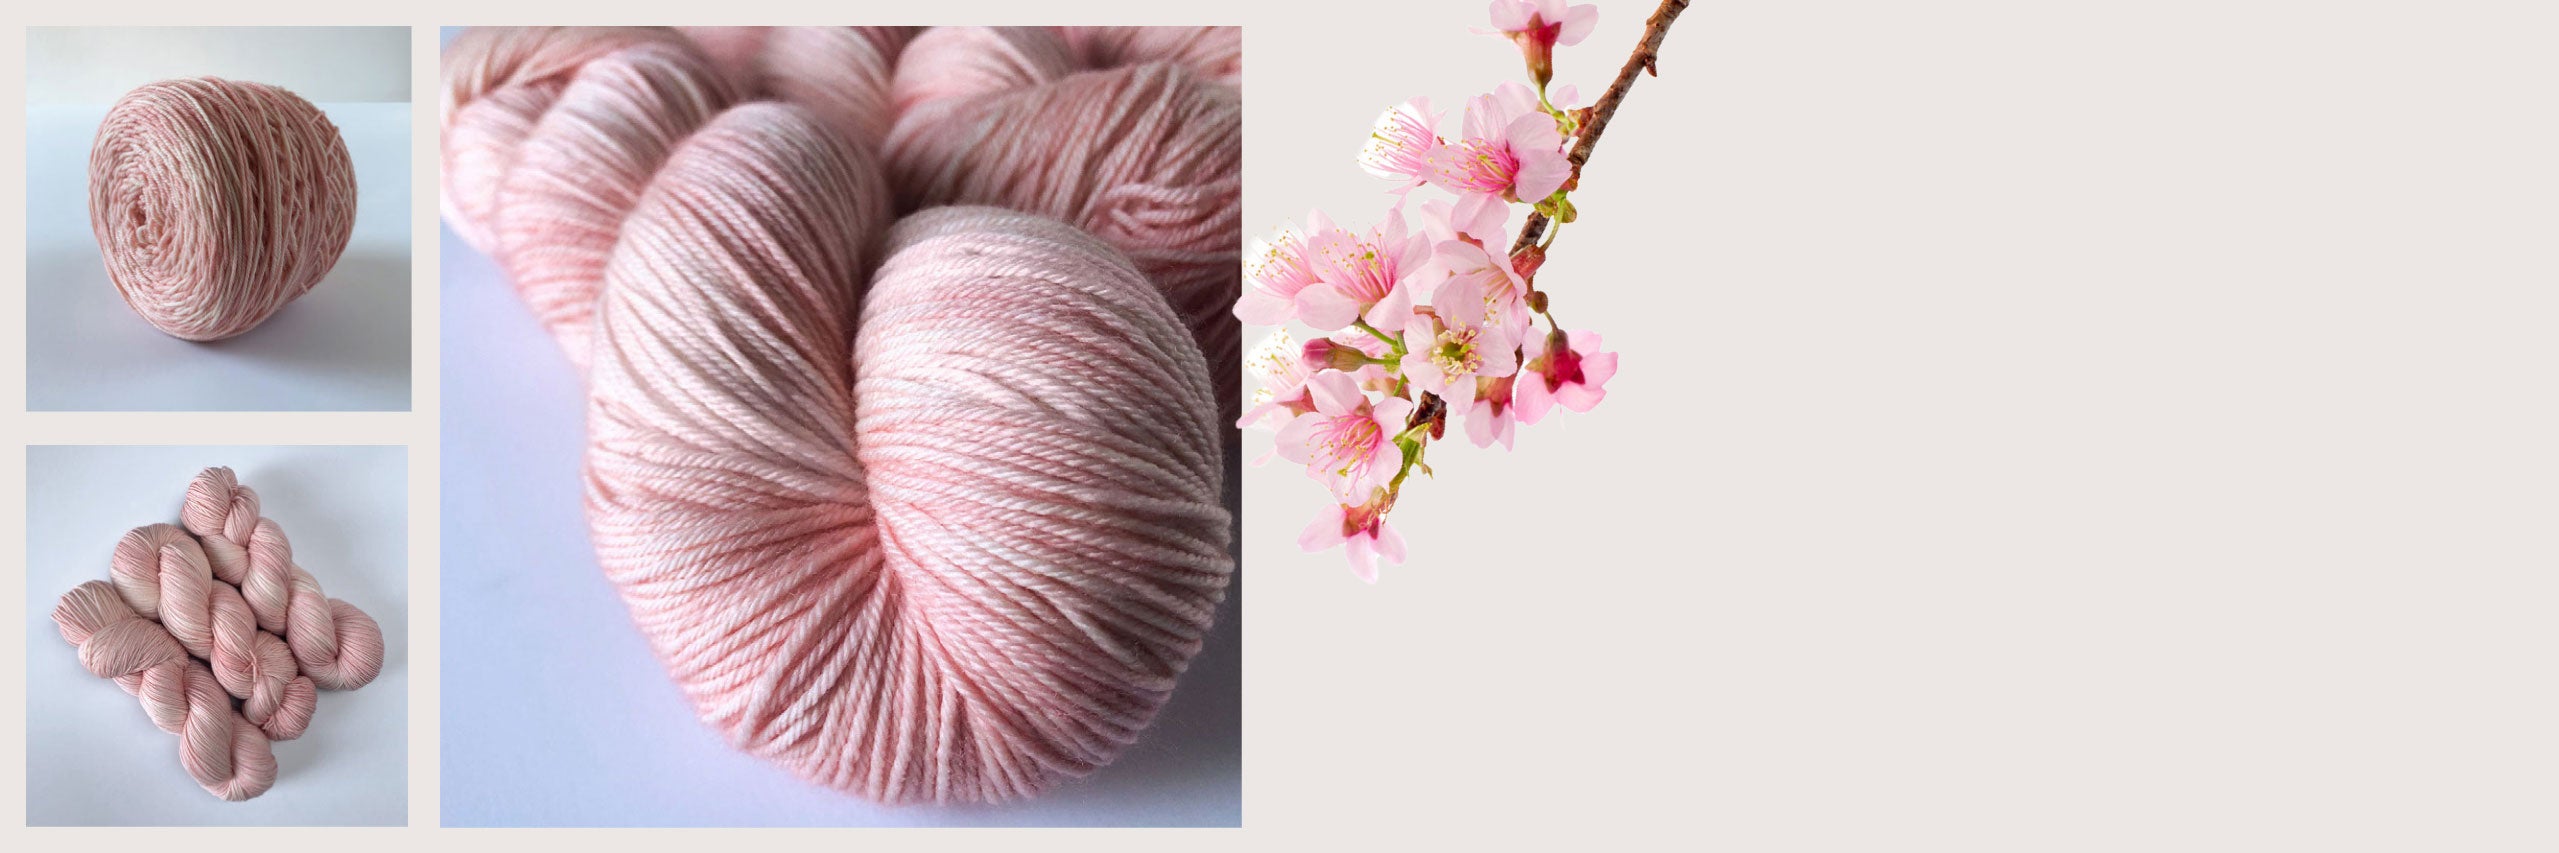 Cherry Blossom sock yarn - fingering weight - global backyard hand dyed yarn 